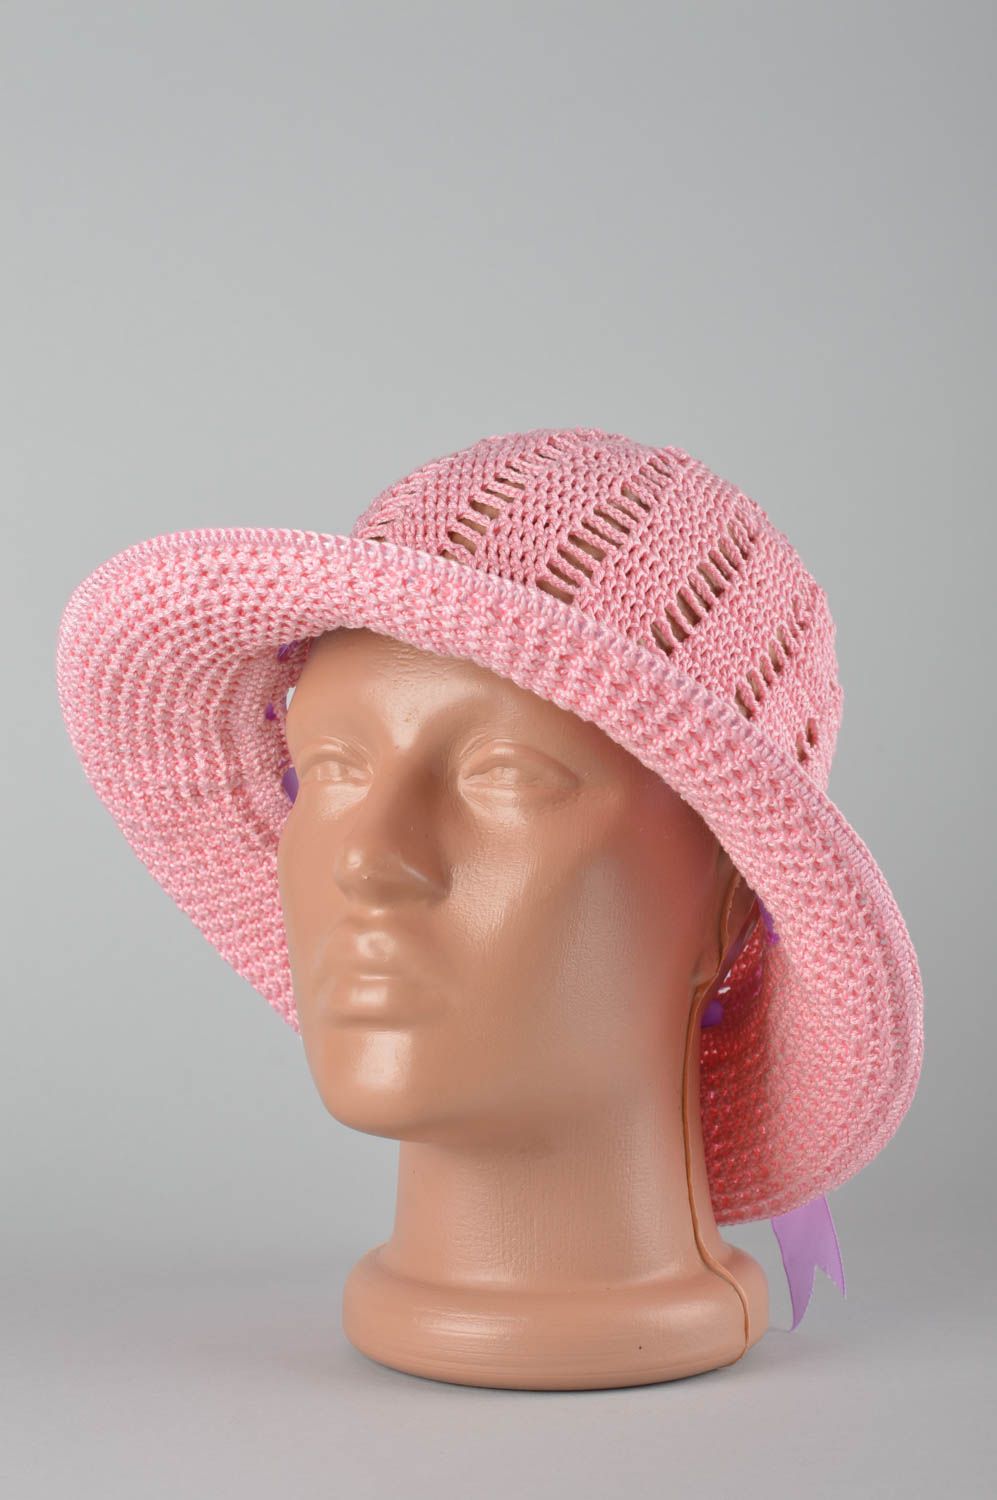 Handmade hat crocheted hat summer hat stylish hat women hat gift for women photo 1